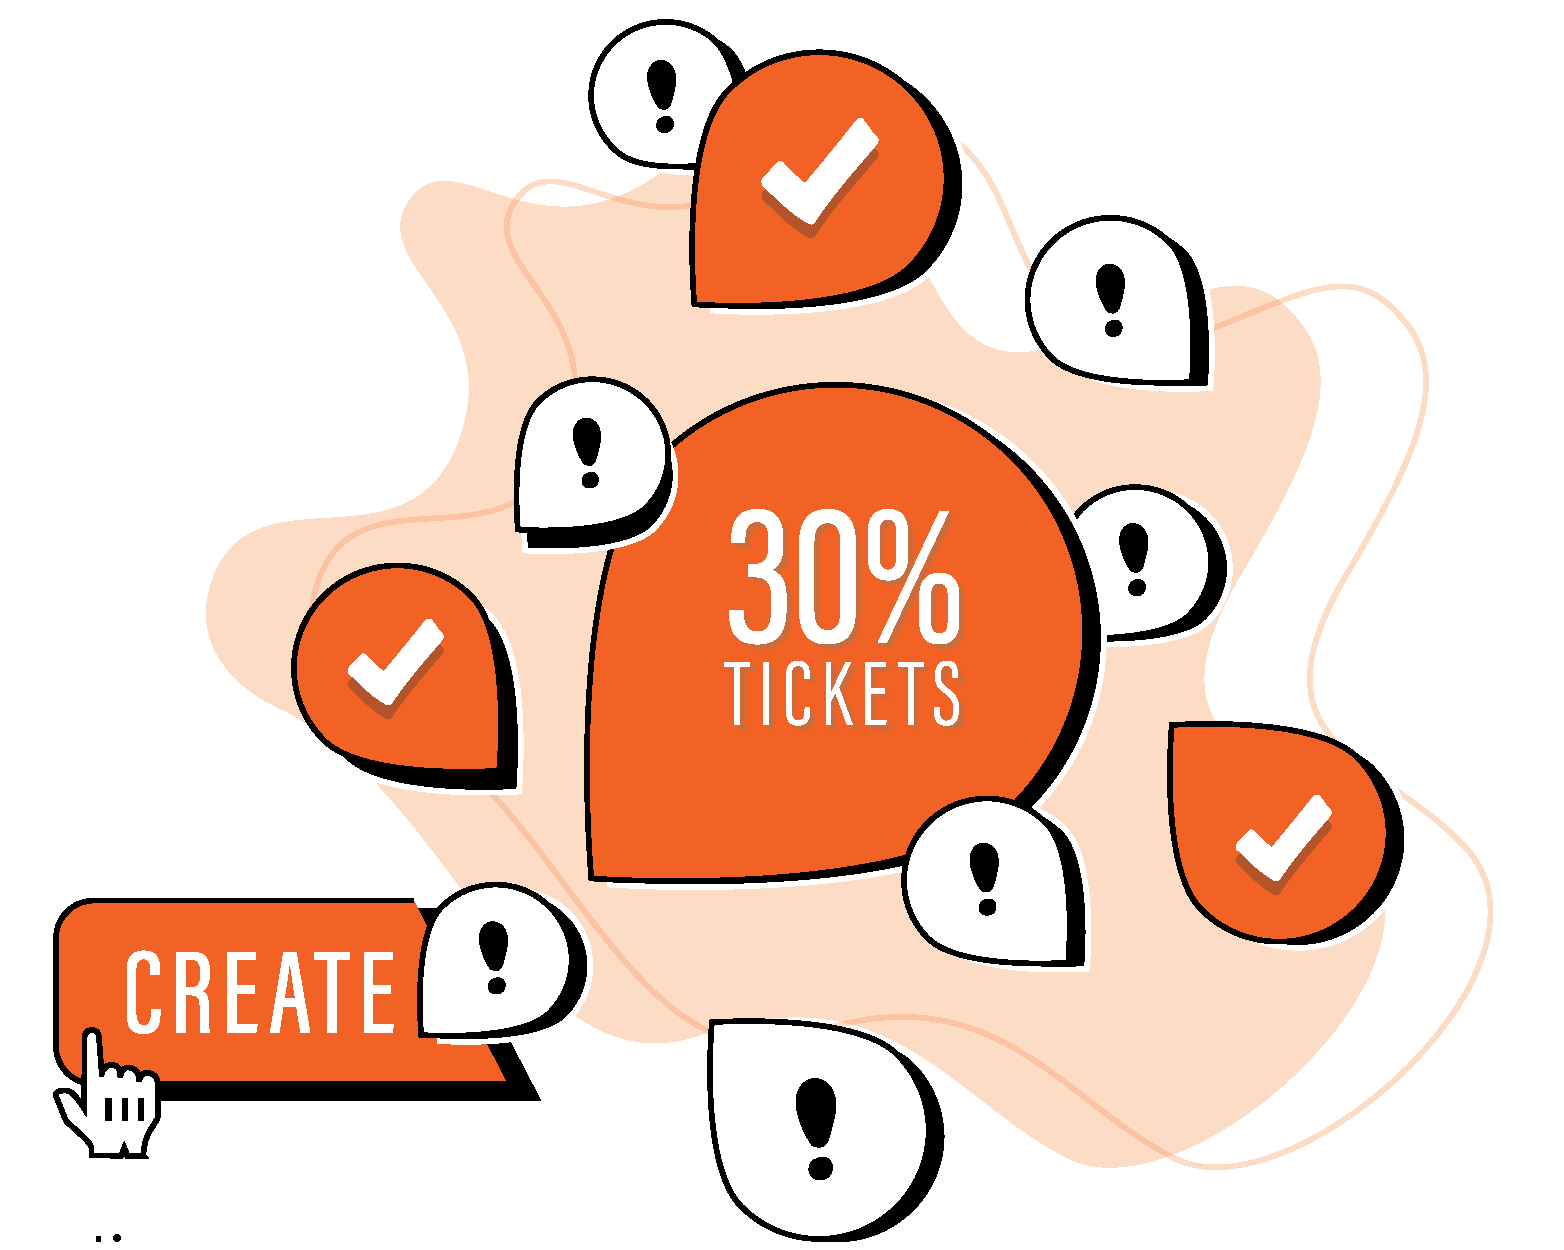 Create 30% tickets graphic